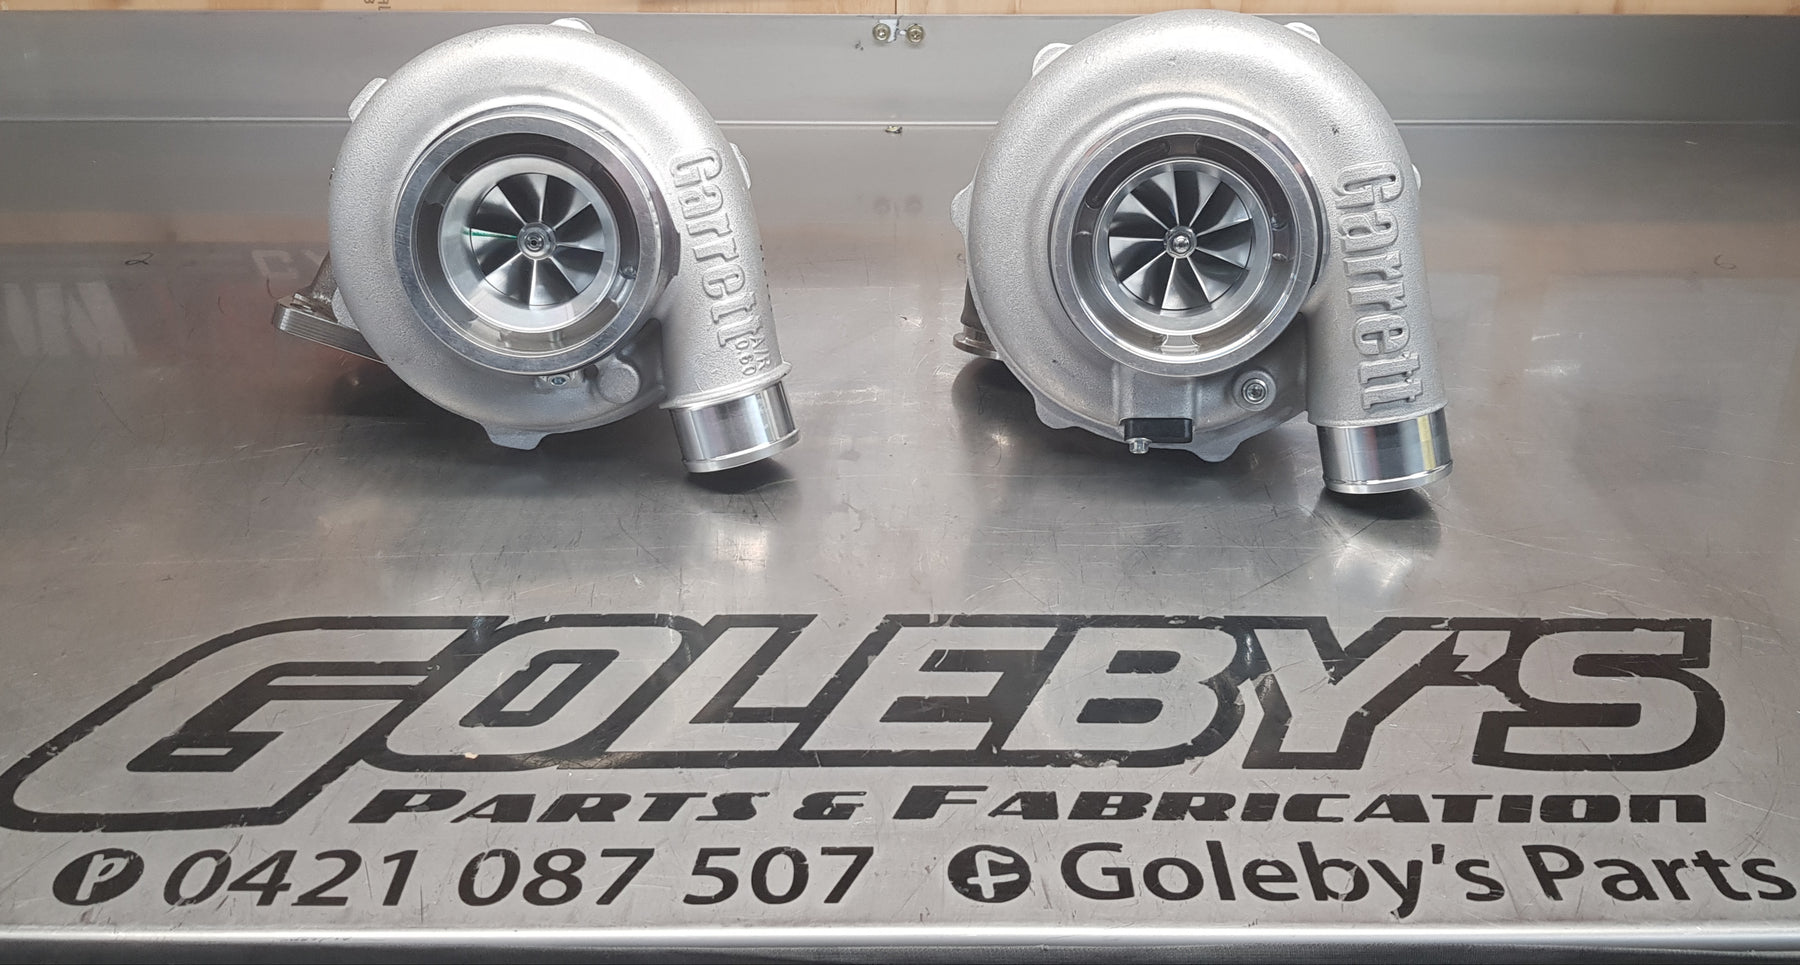 Garrett-G30-Series-VS-Garrett-GTX-Series-Turbochargers Goleby's Parts